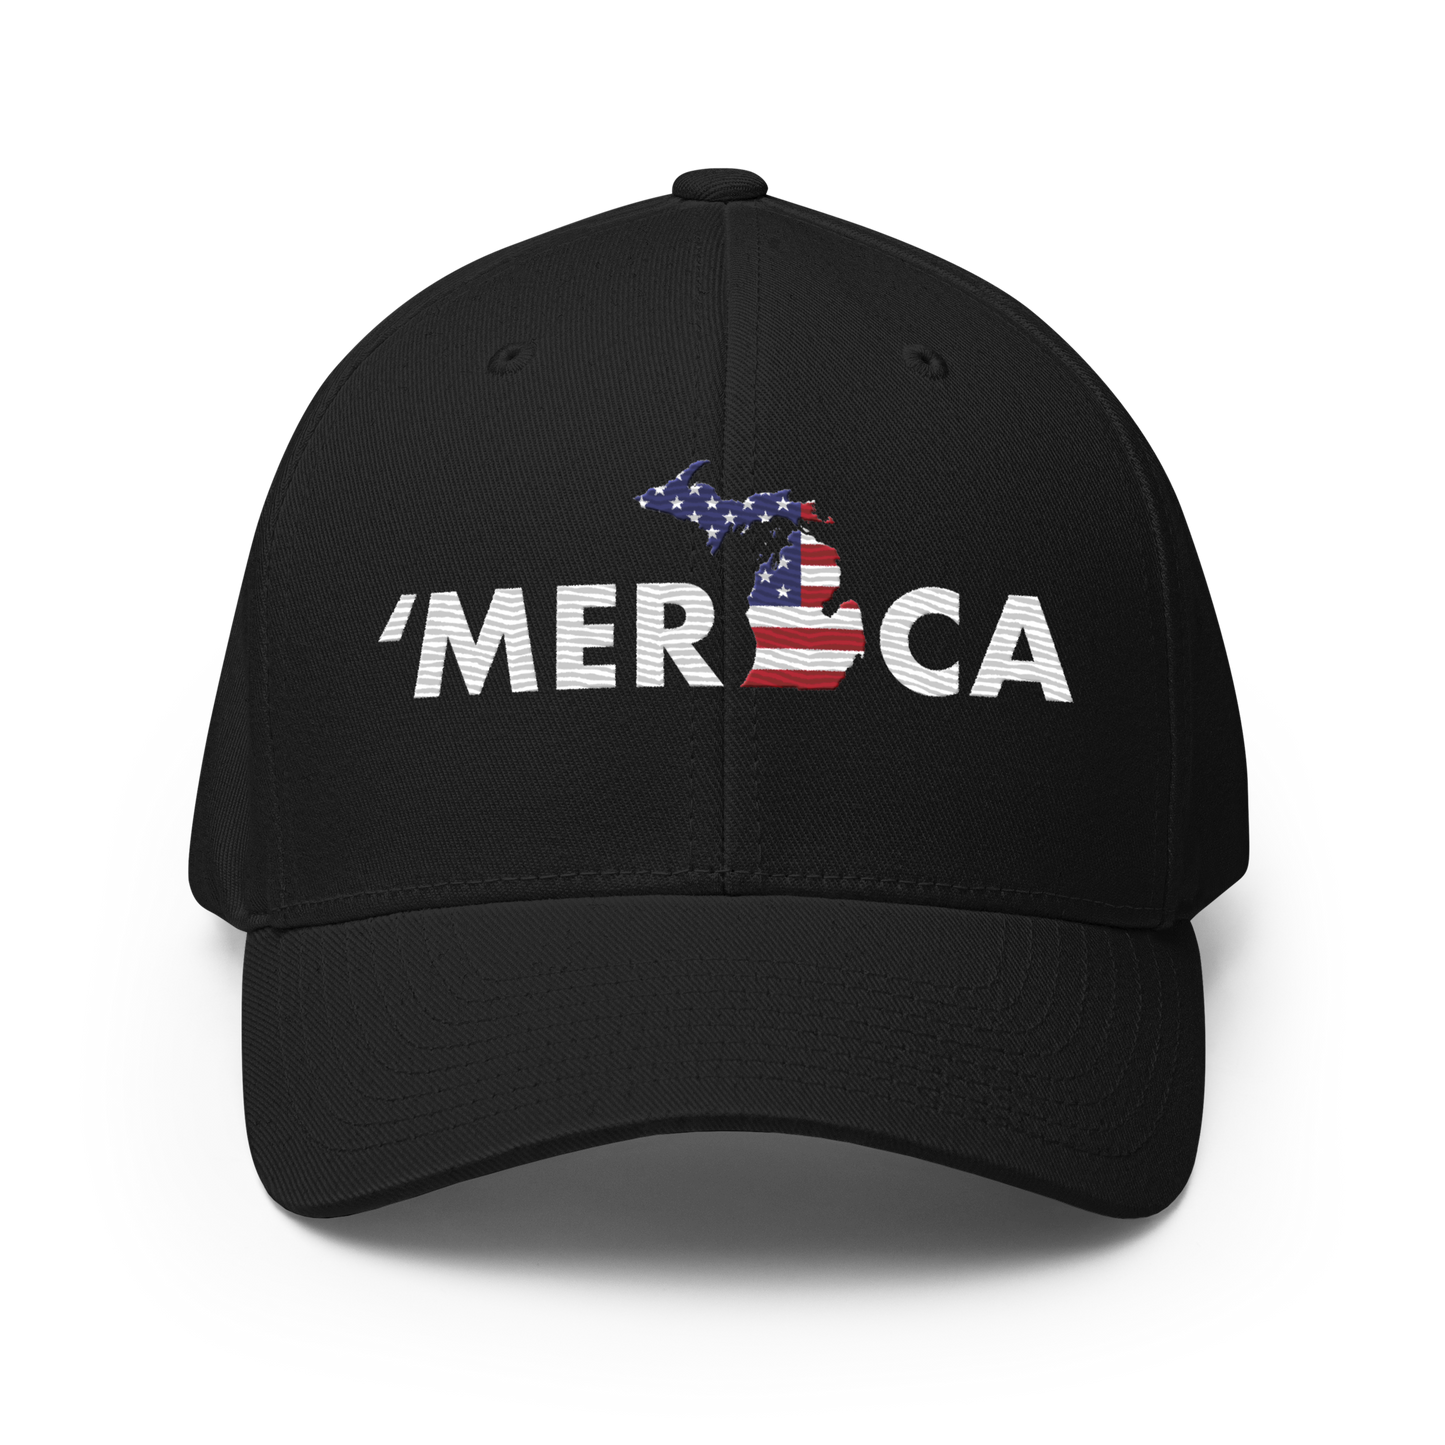 Michigan 'Merica' Fitted Baseball Cap